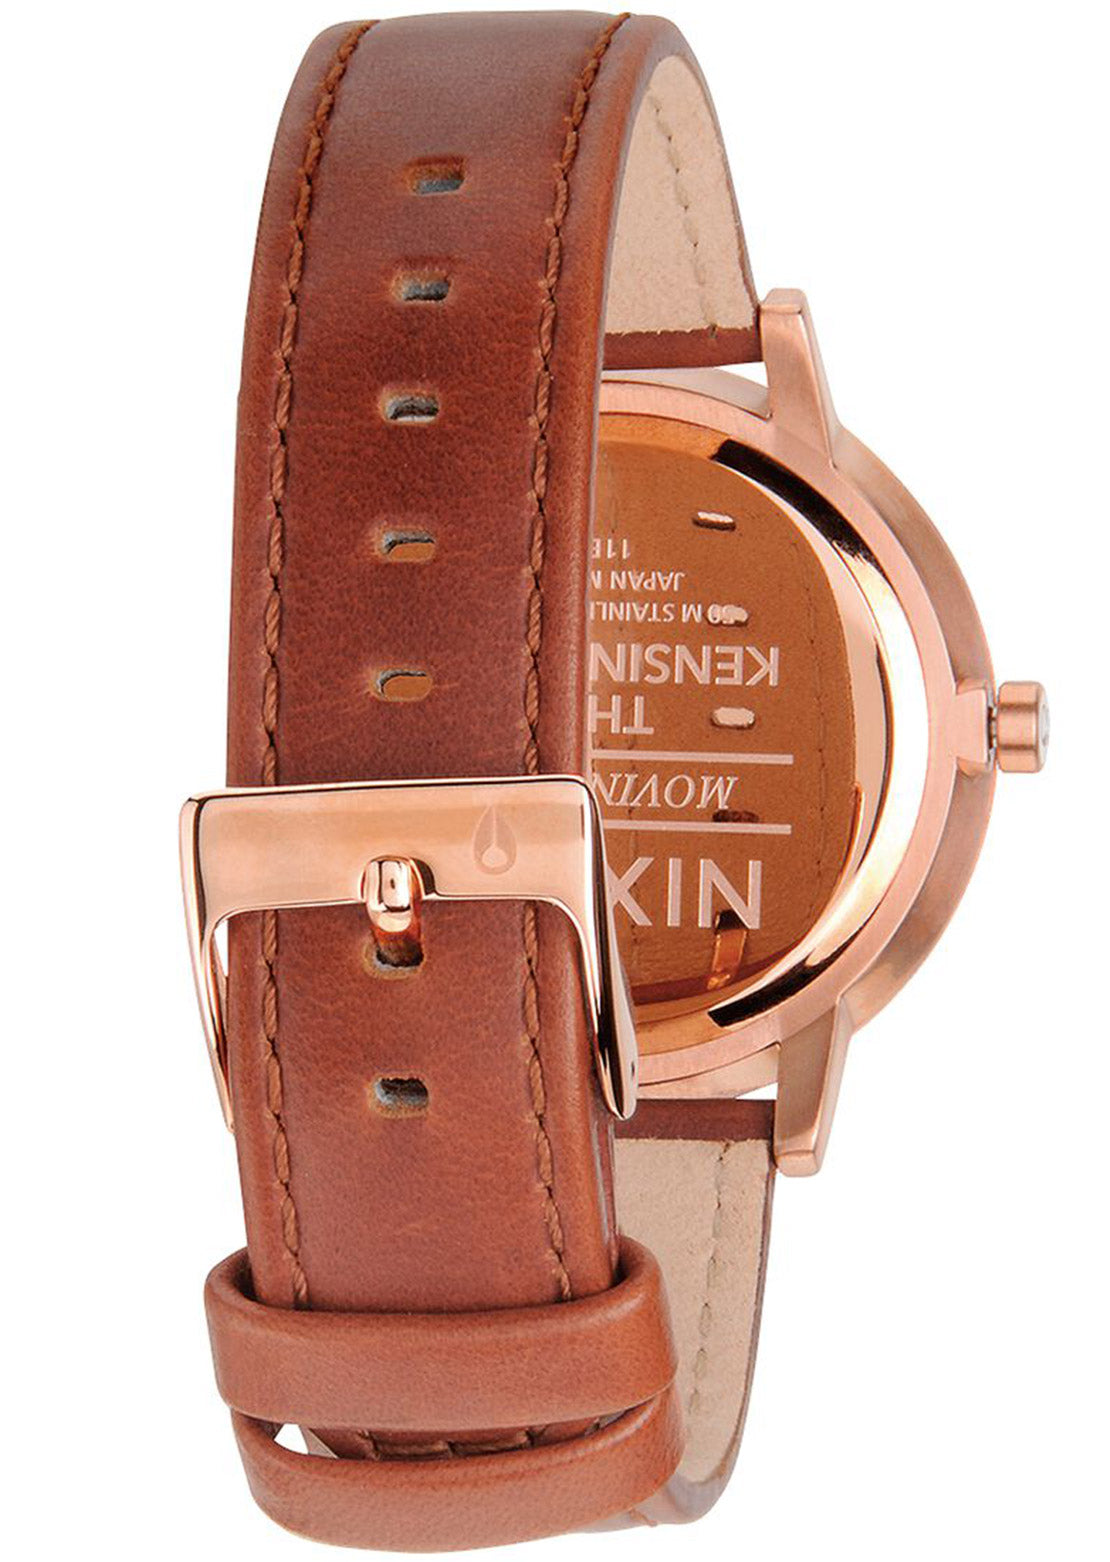 Nixon Women&#39;s Kensington Leather Watch Rose Gold/White